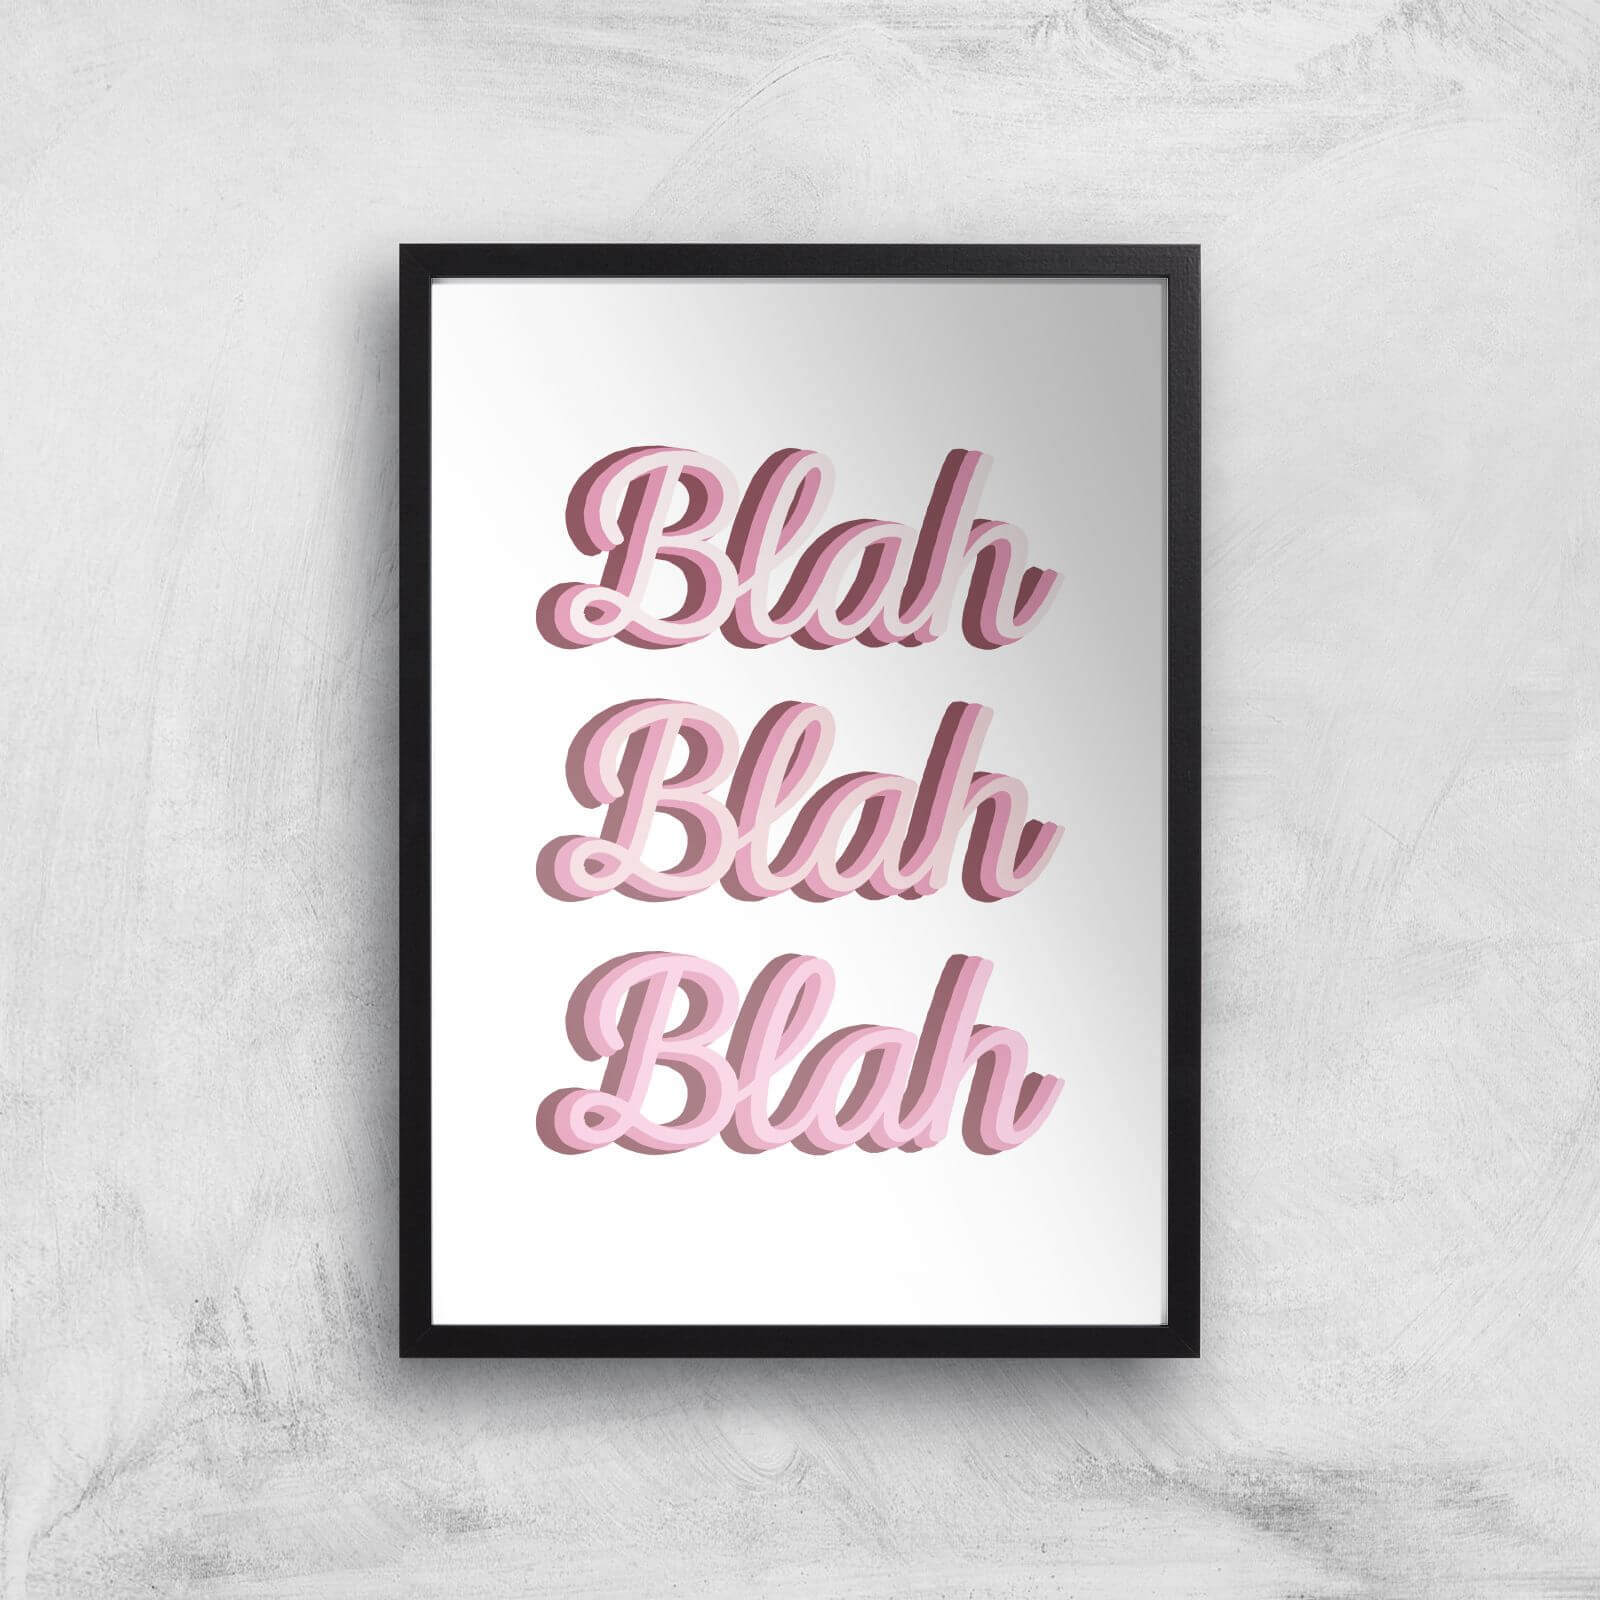 Blah Blah Blah Giclée Art Print - A3 - Black Frame